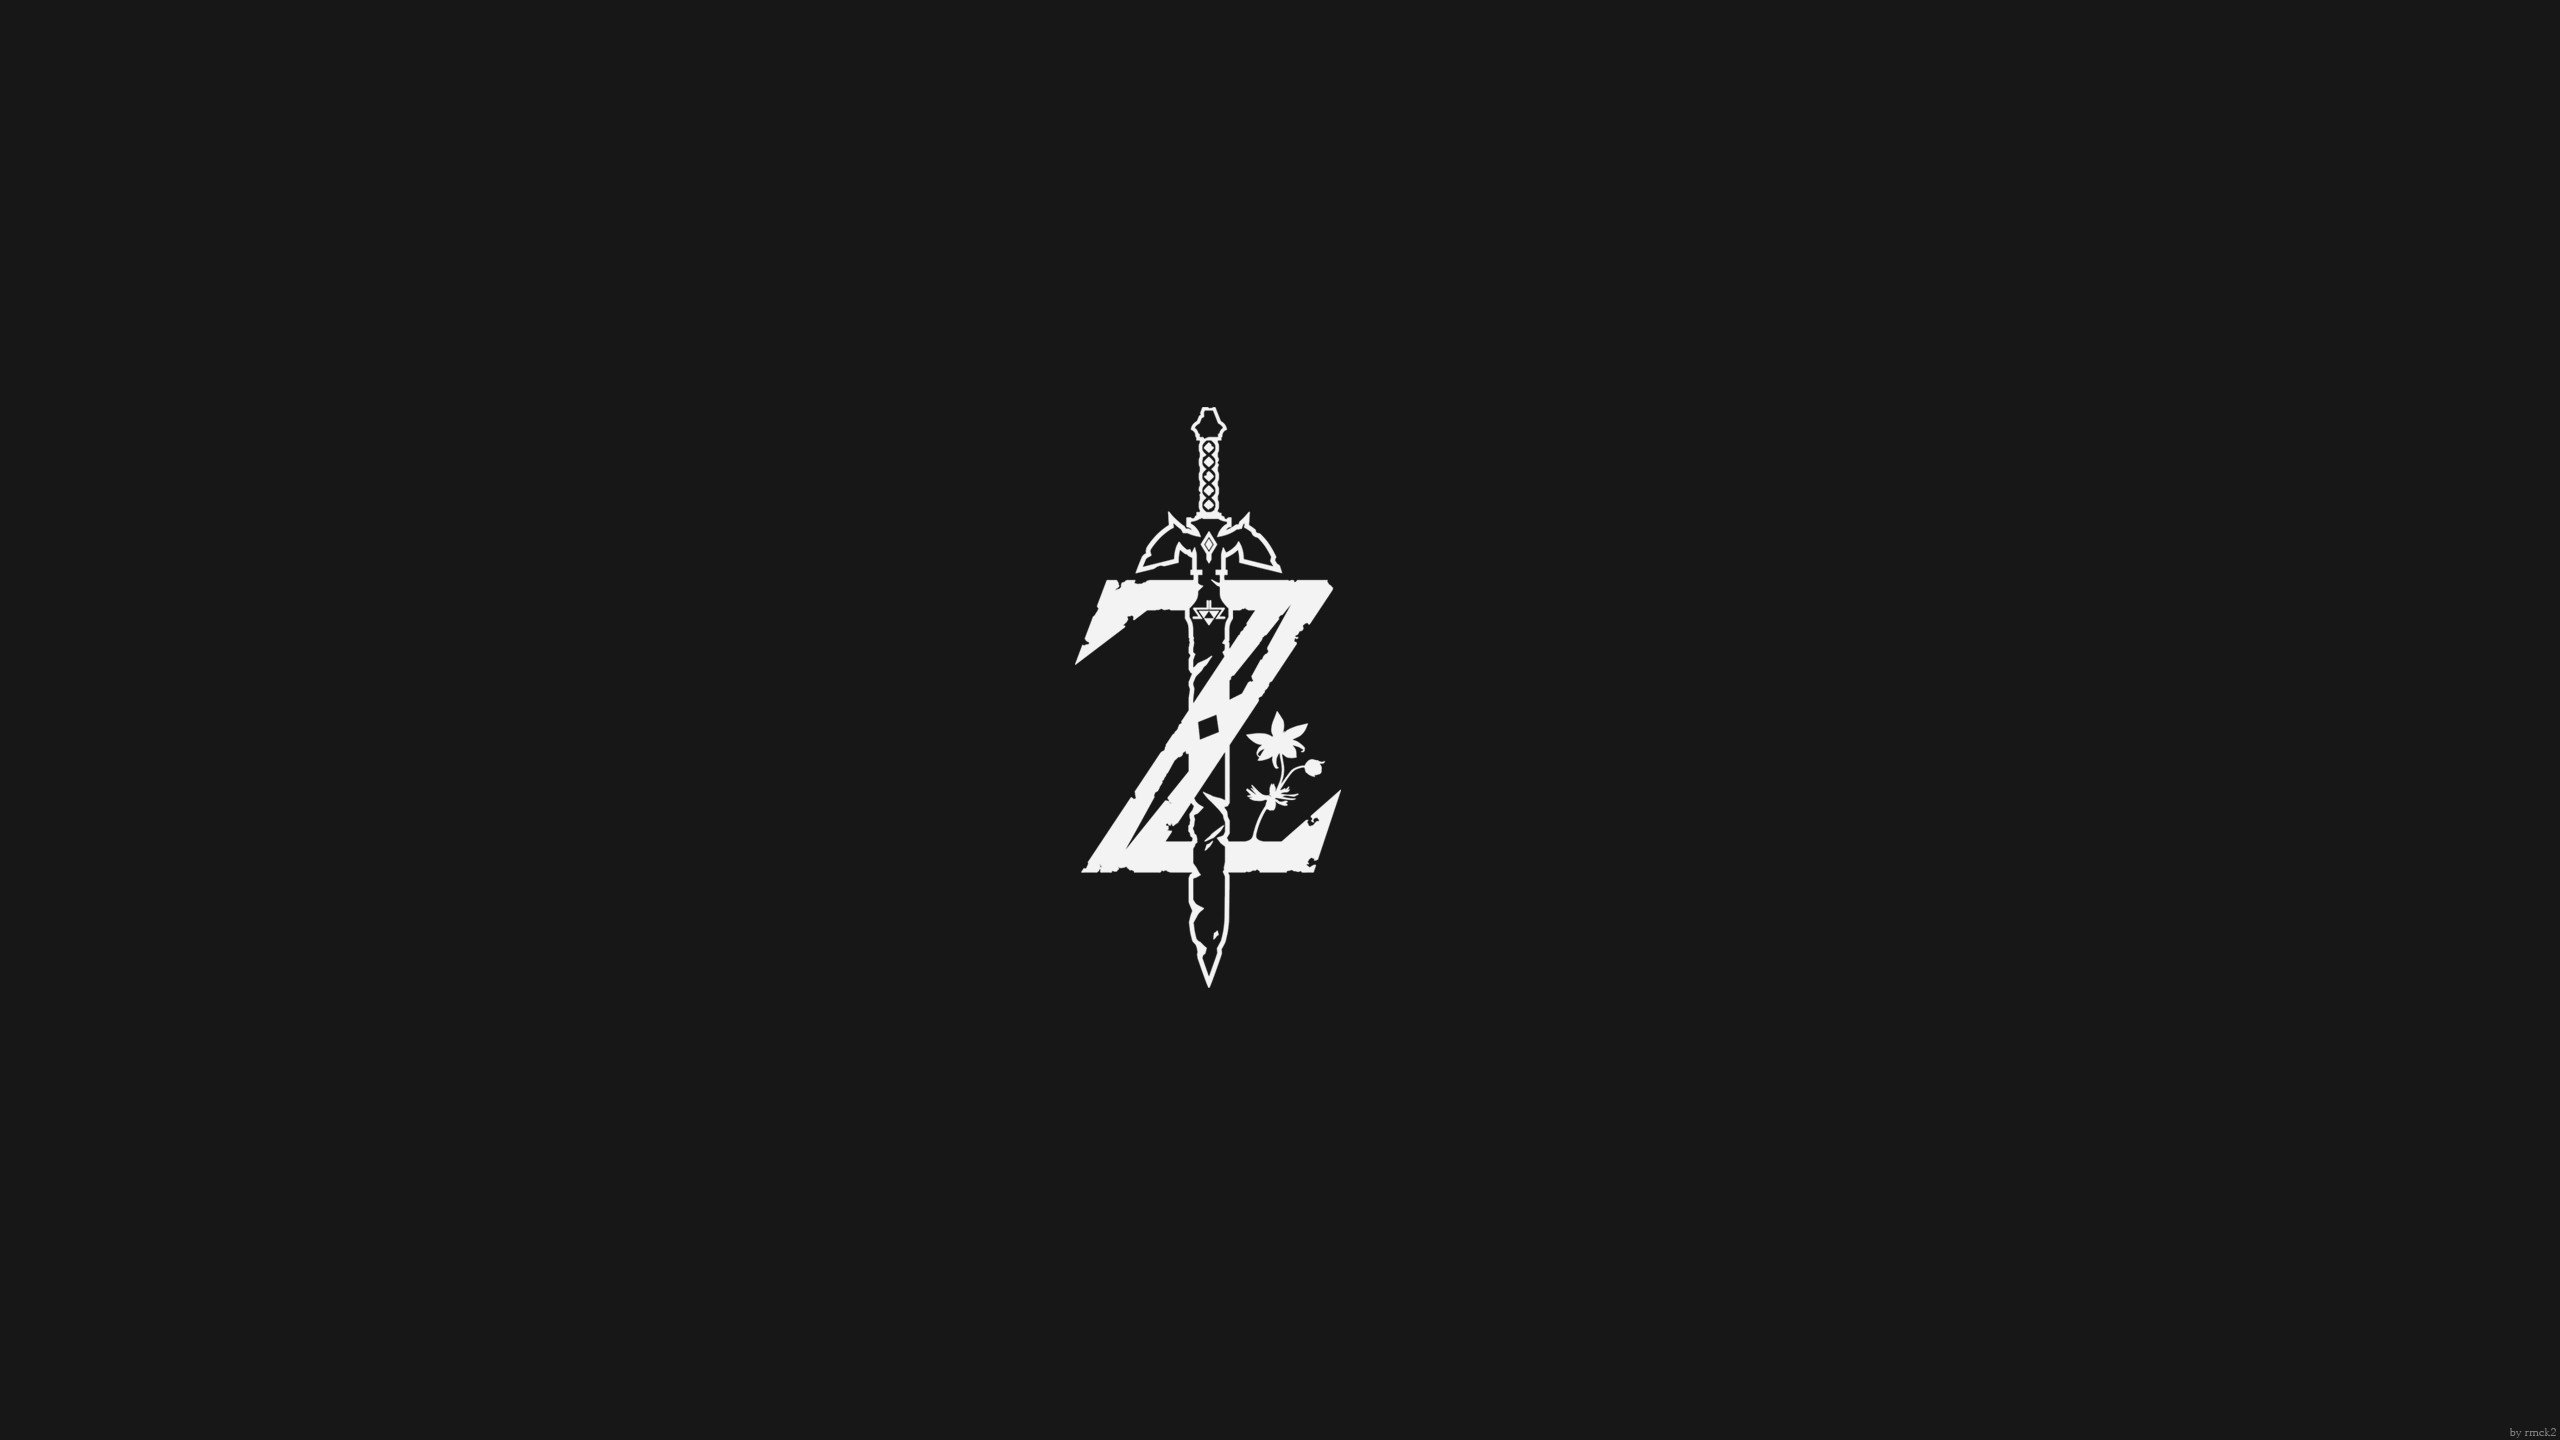 General 2560x1440 The Legend of Zelda: Breath of the Wild minimalism logo video games simple background black background